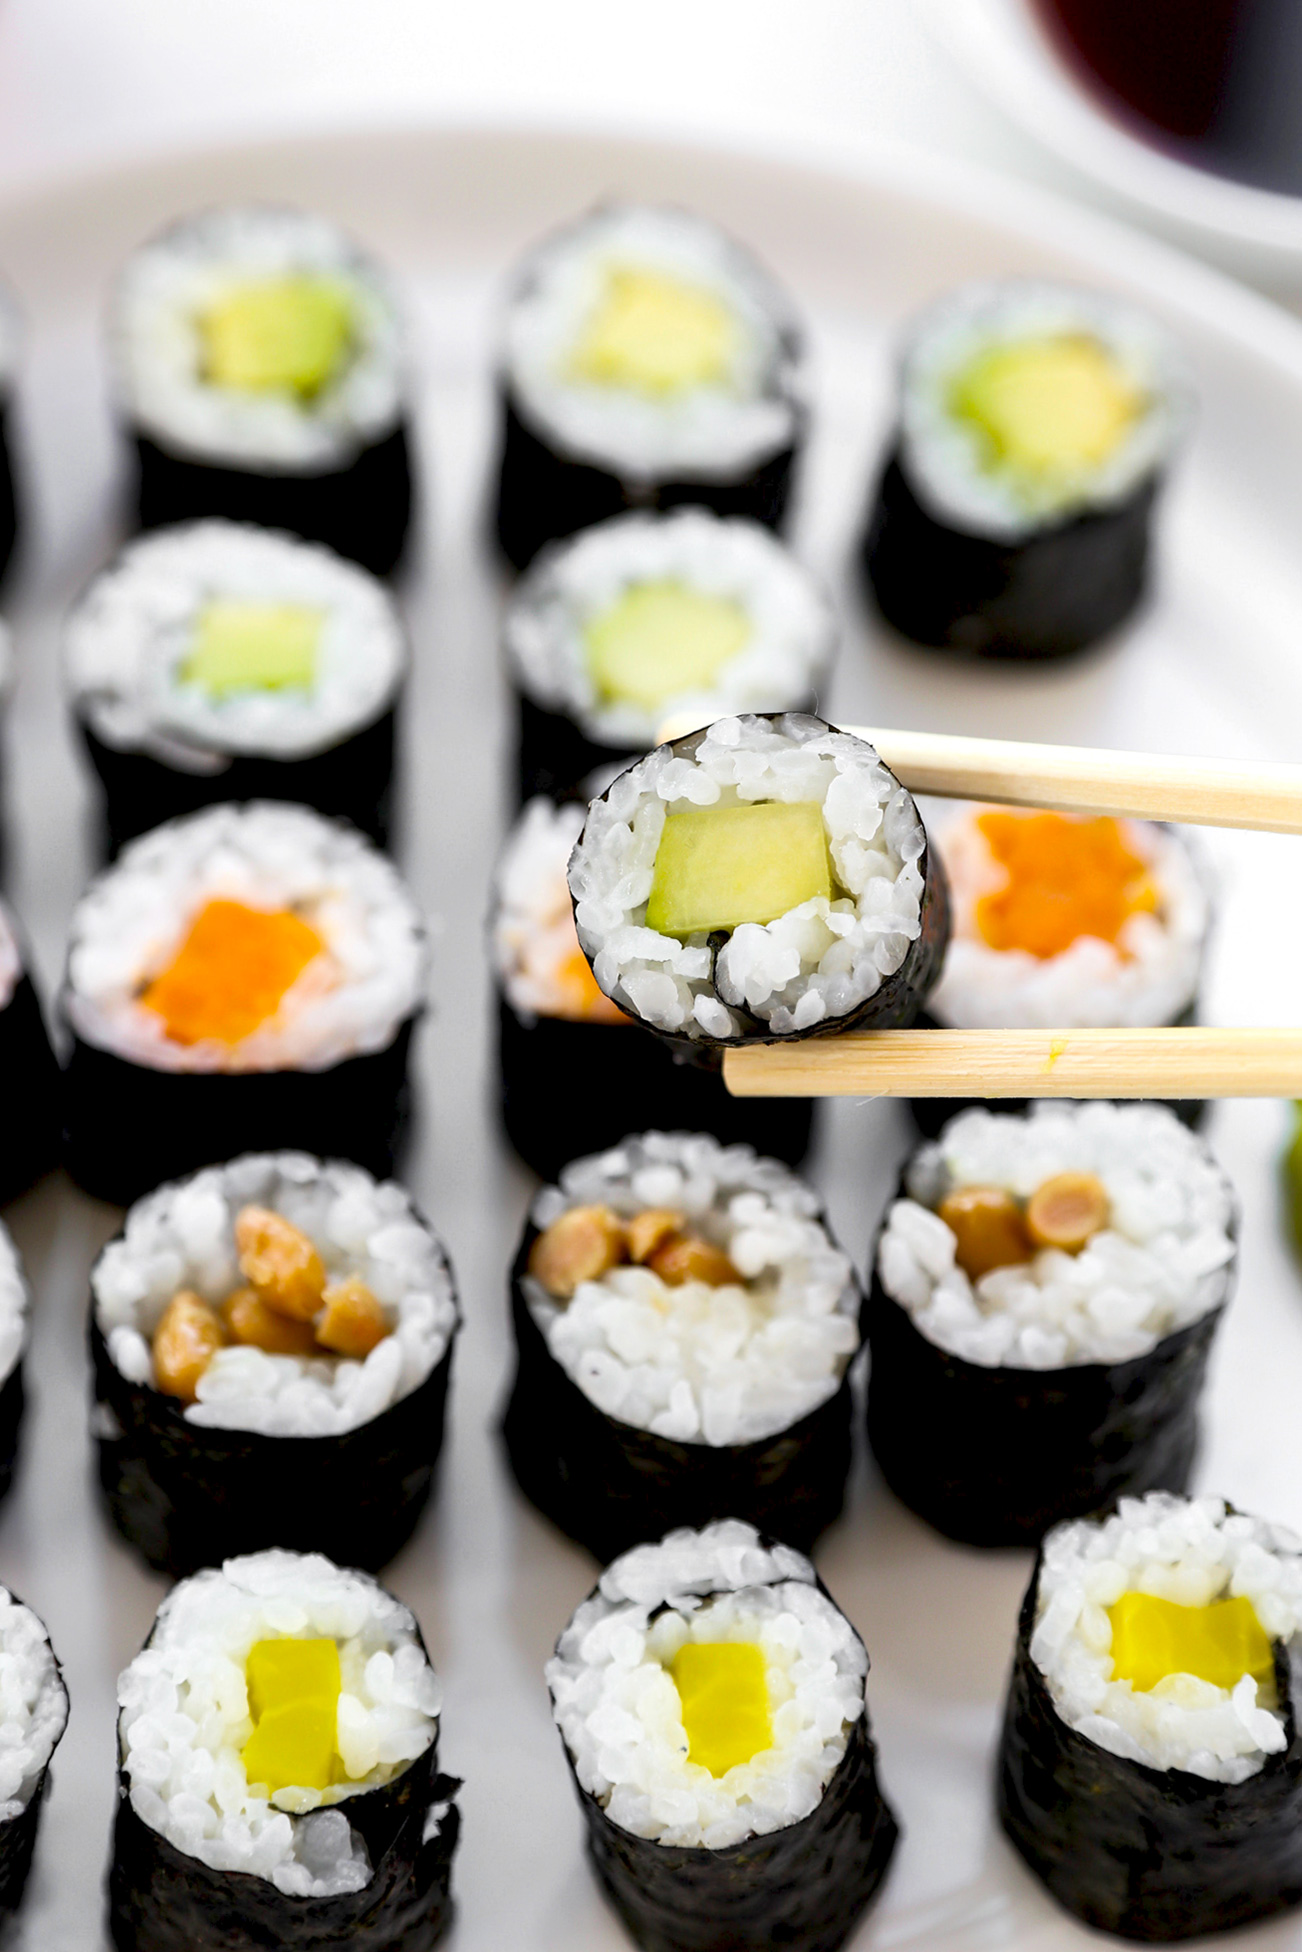 https://pickledplum.com/wp-content/uploads/2020/05/maki-sushi-1.jpg